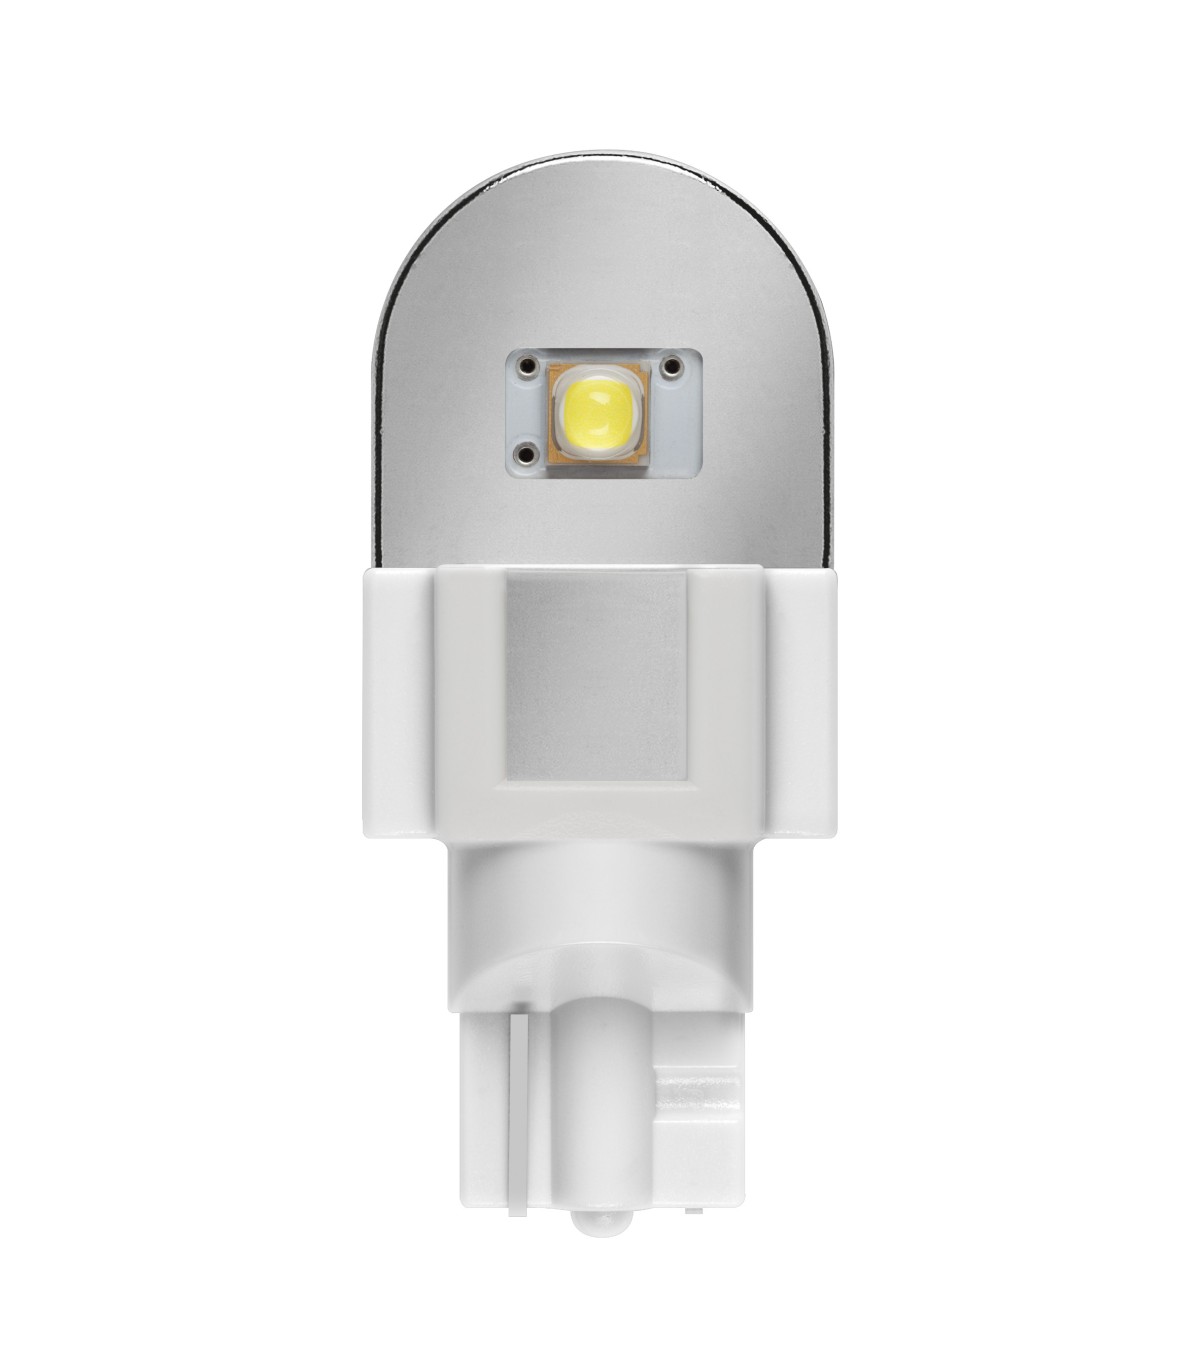 Osram Oslon P1616 : la plus petite LED infrarouge au monde